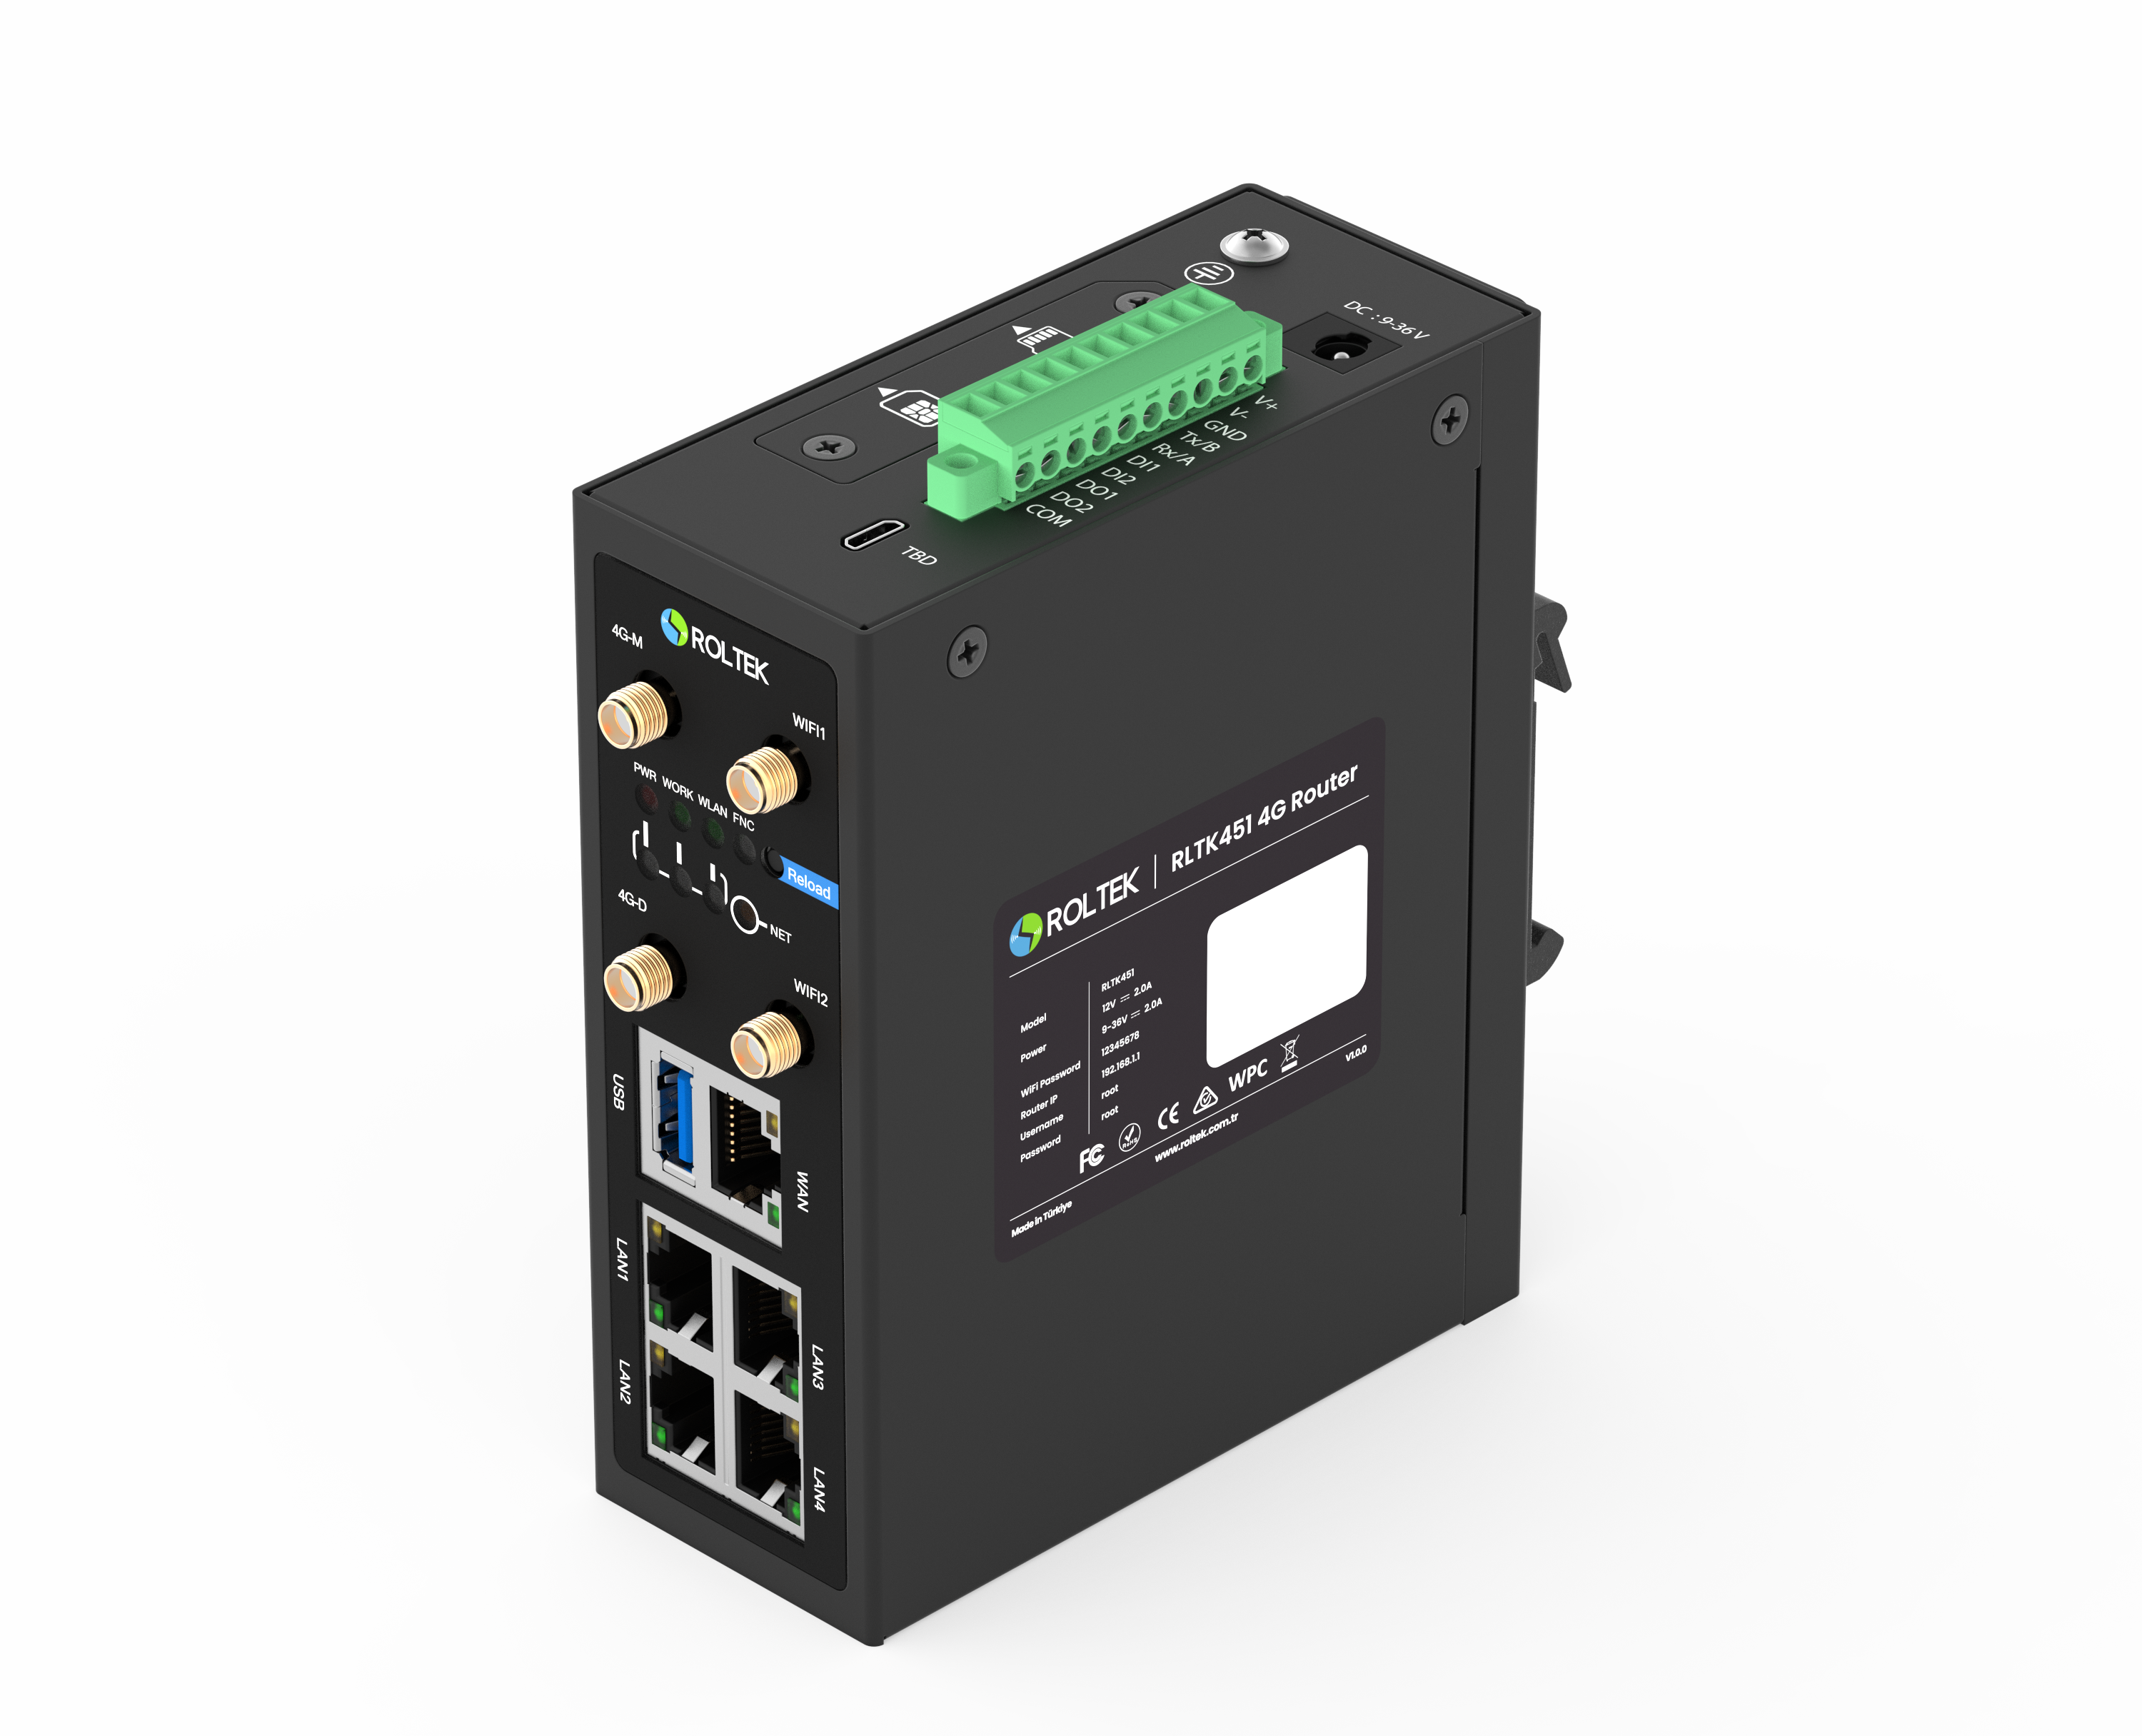 RLTK451 5-Port 4G Industrial Router